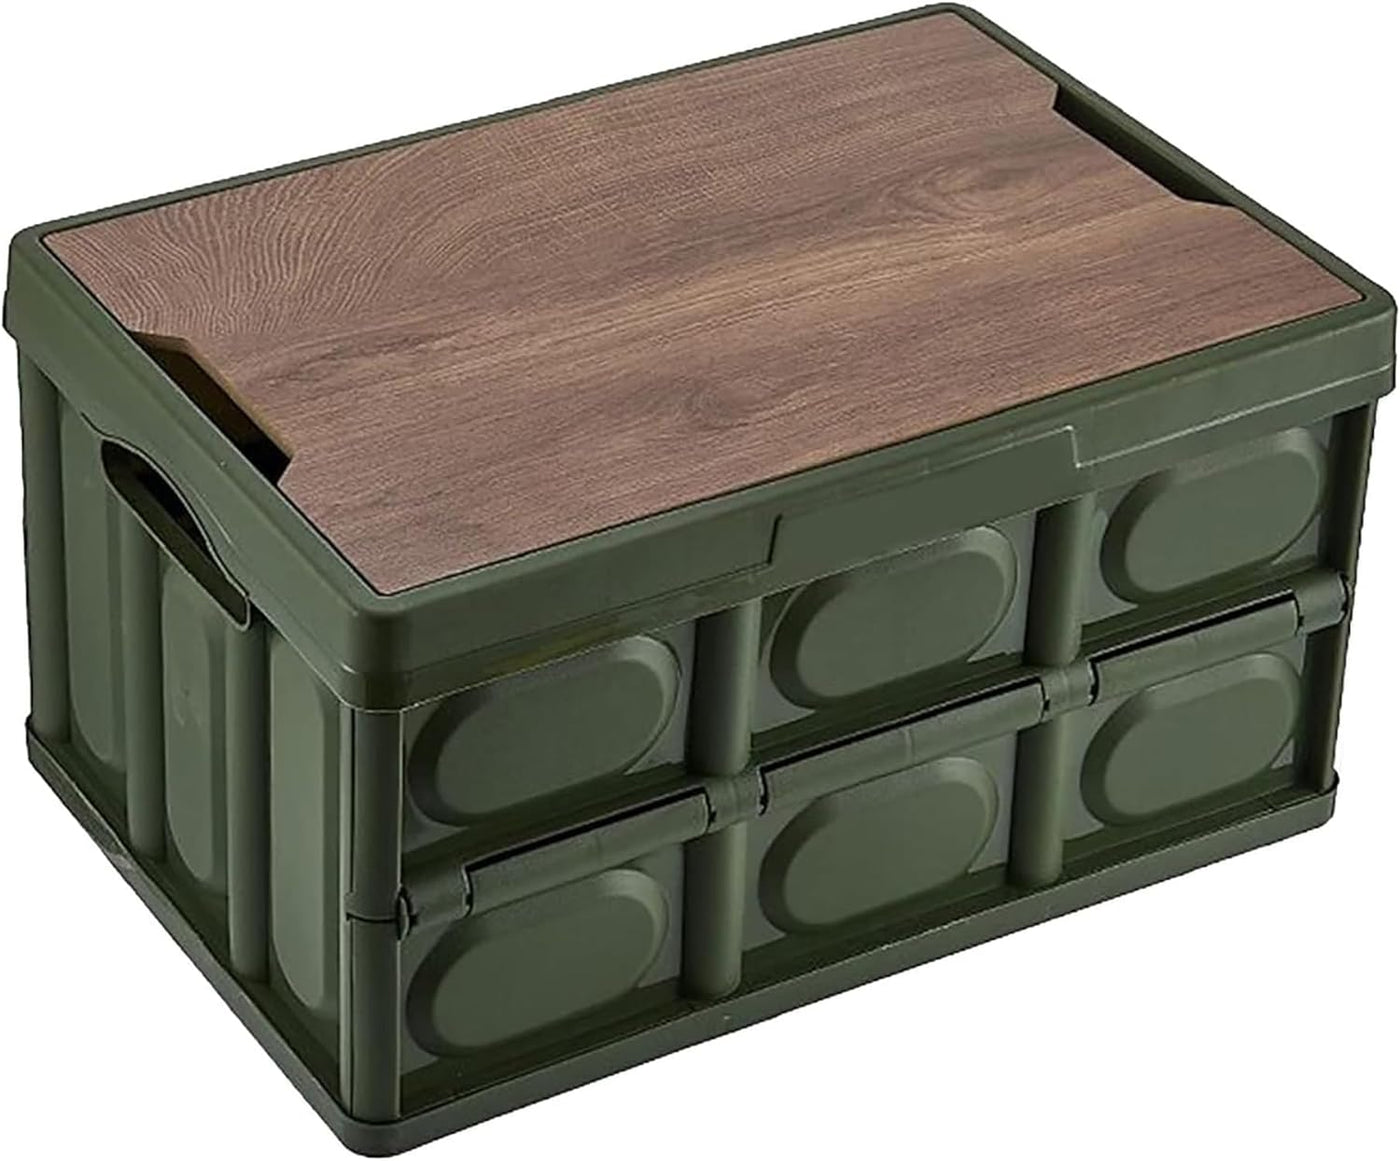 Folding Storage Bins with Wood Lid (30Litre, Green)